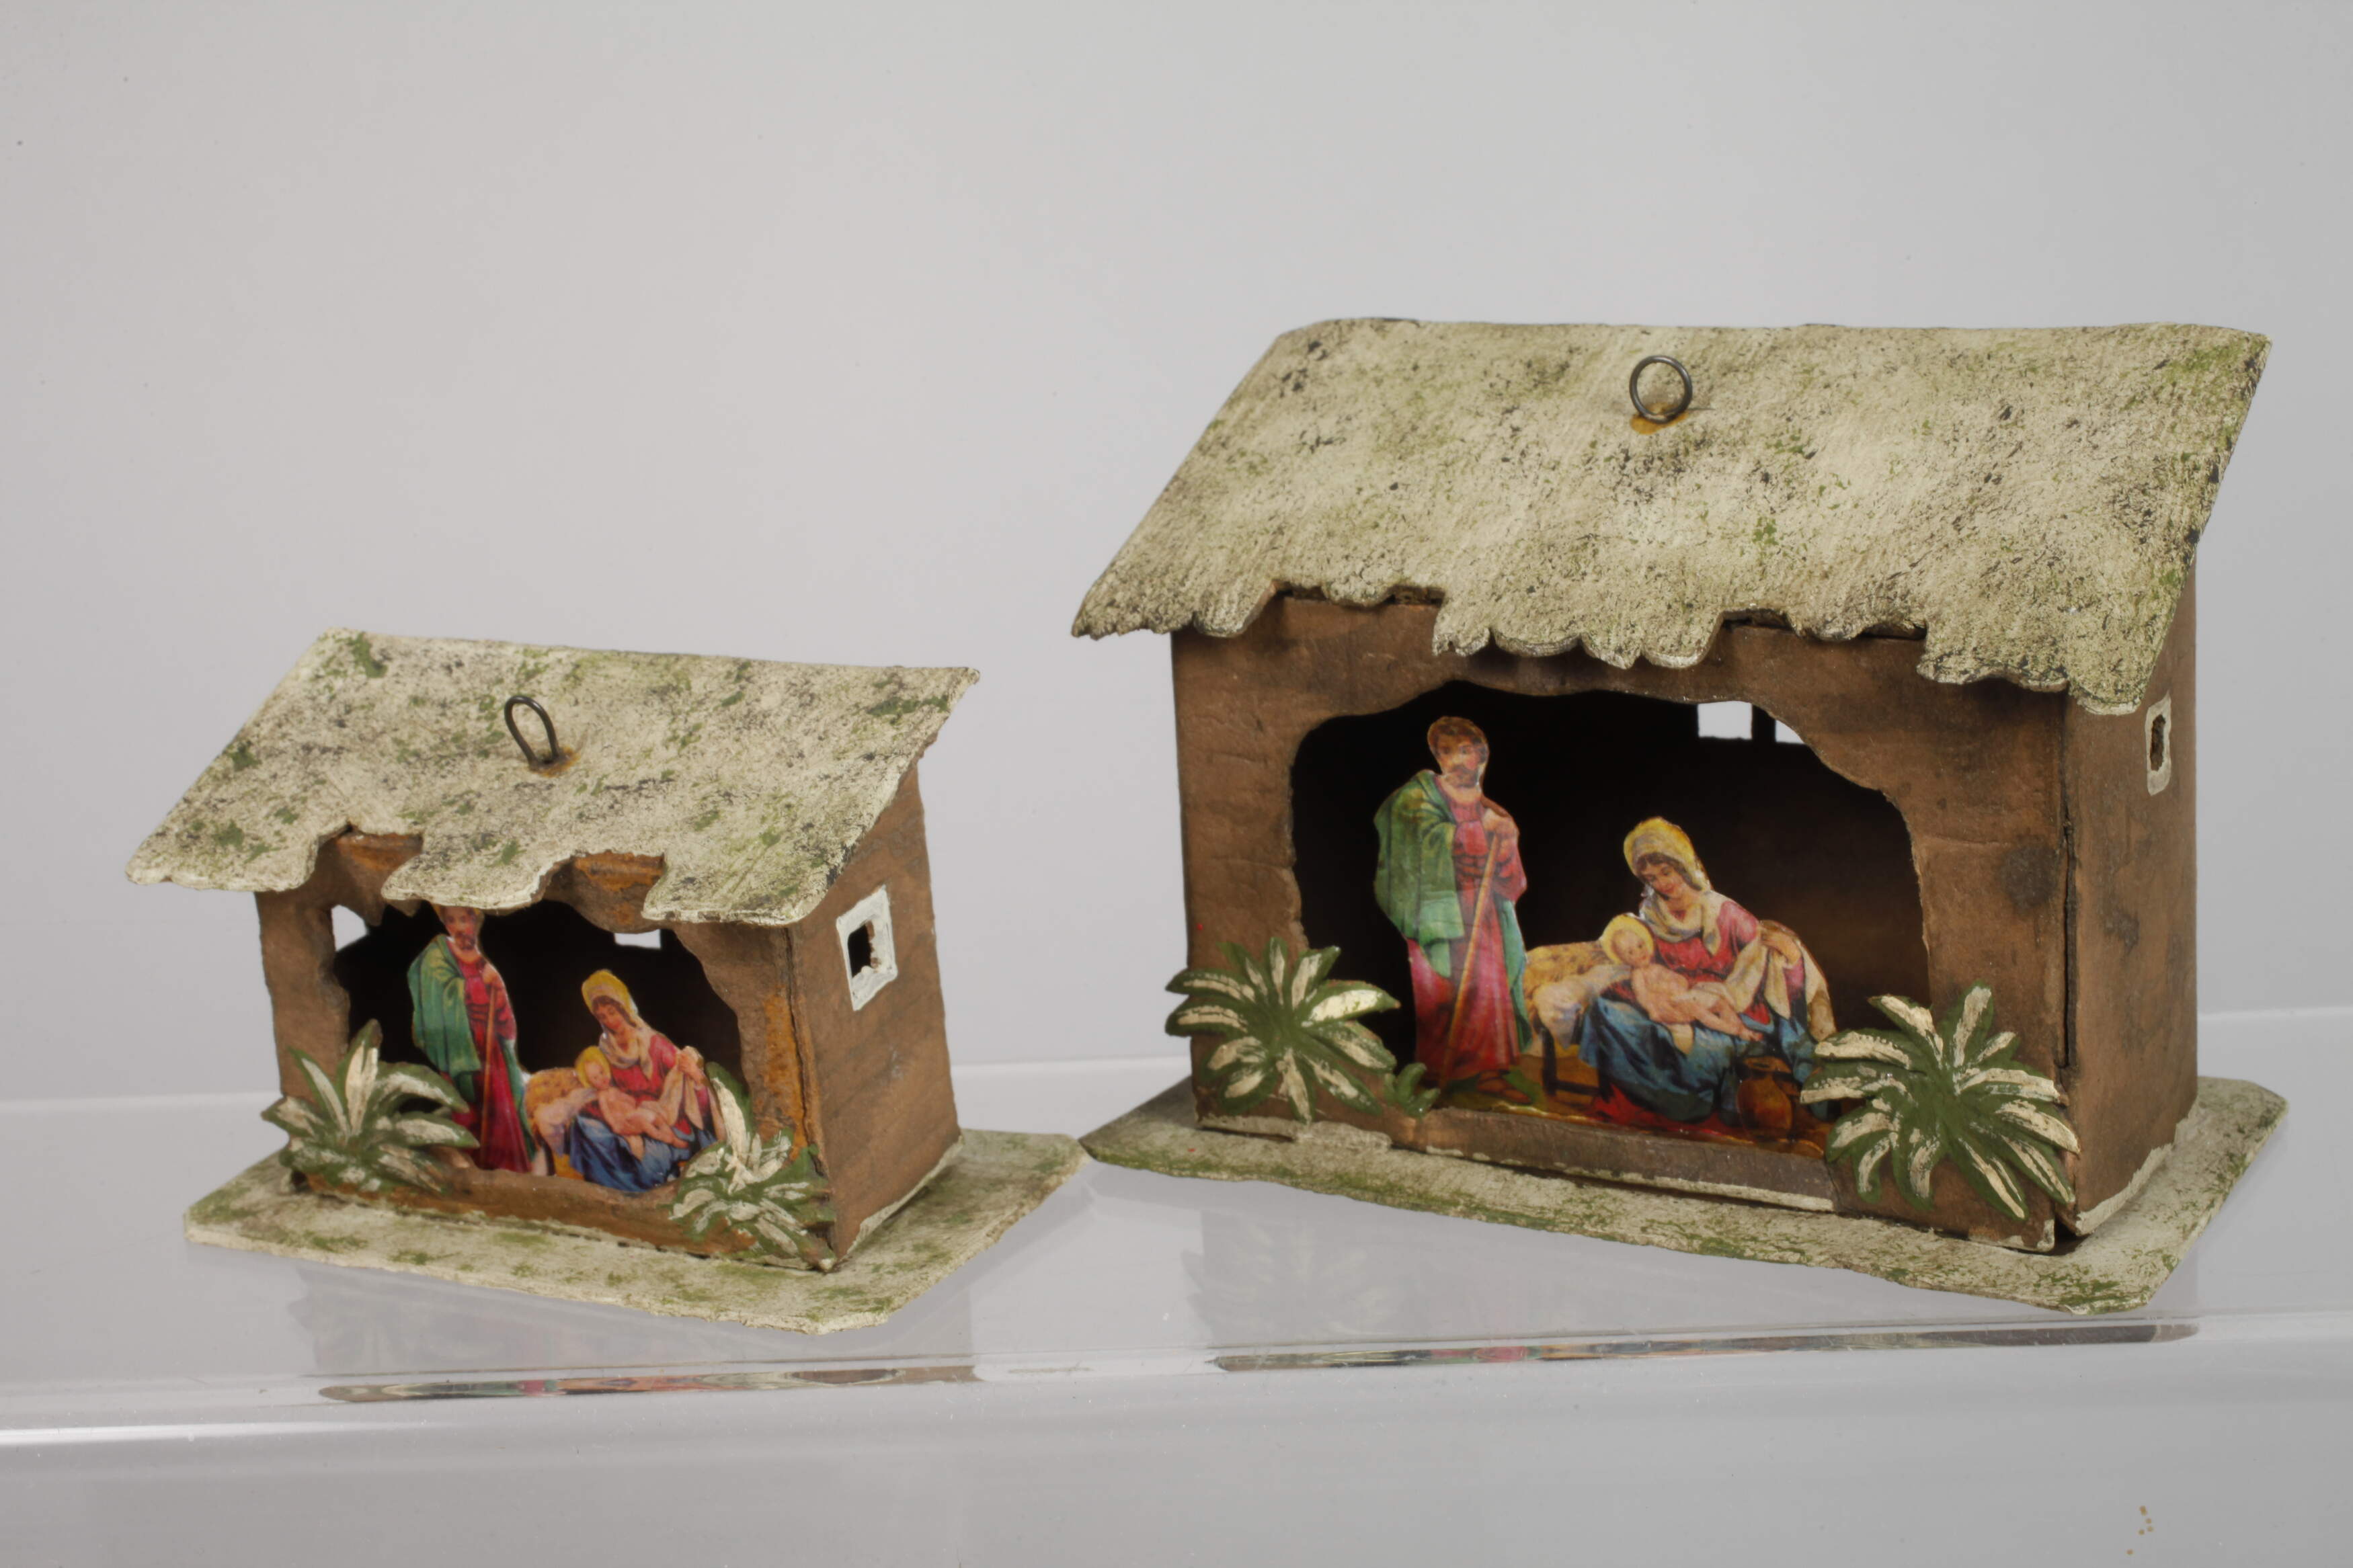 Dresden cardboard set of three-dimensional nativity scenes - Image 2 of 3